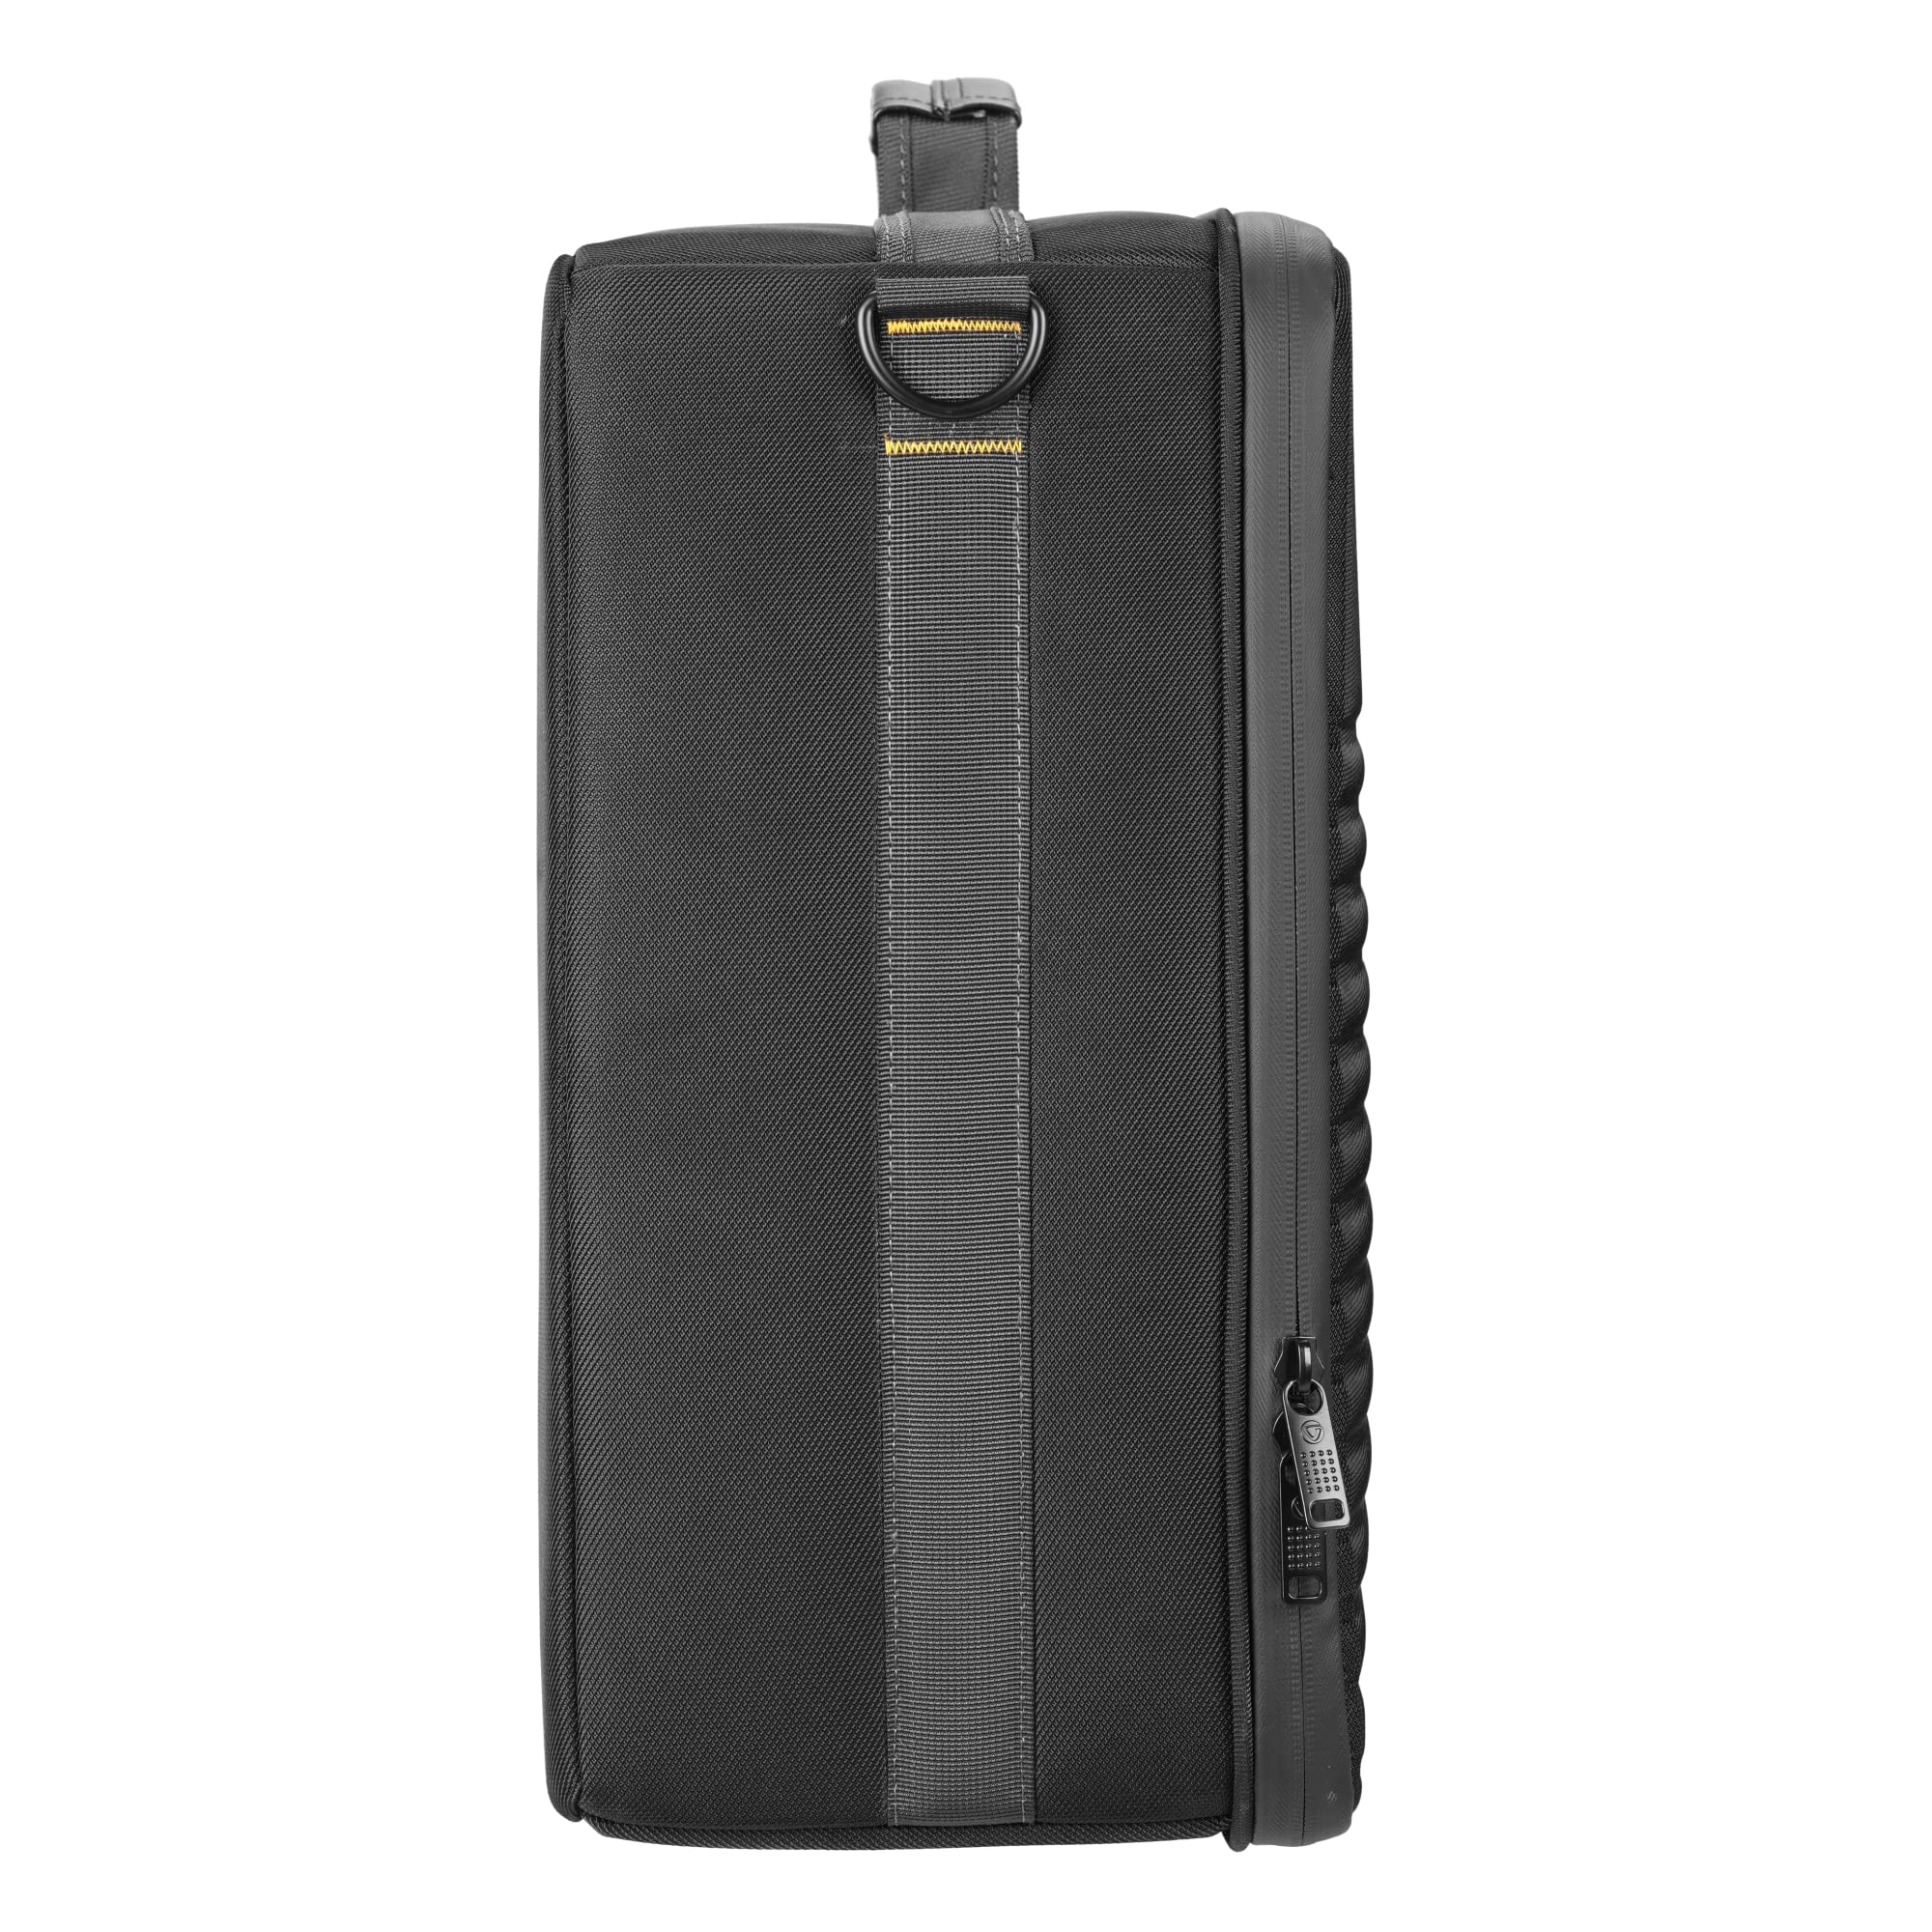 Vanguard VEO BIB Divider S53 Customizeable Insert/Protection Bag for SLR DSLR Camera, Lenses, Accessories, Black